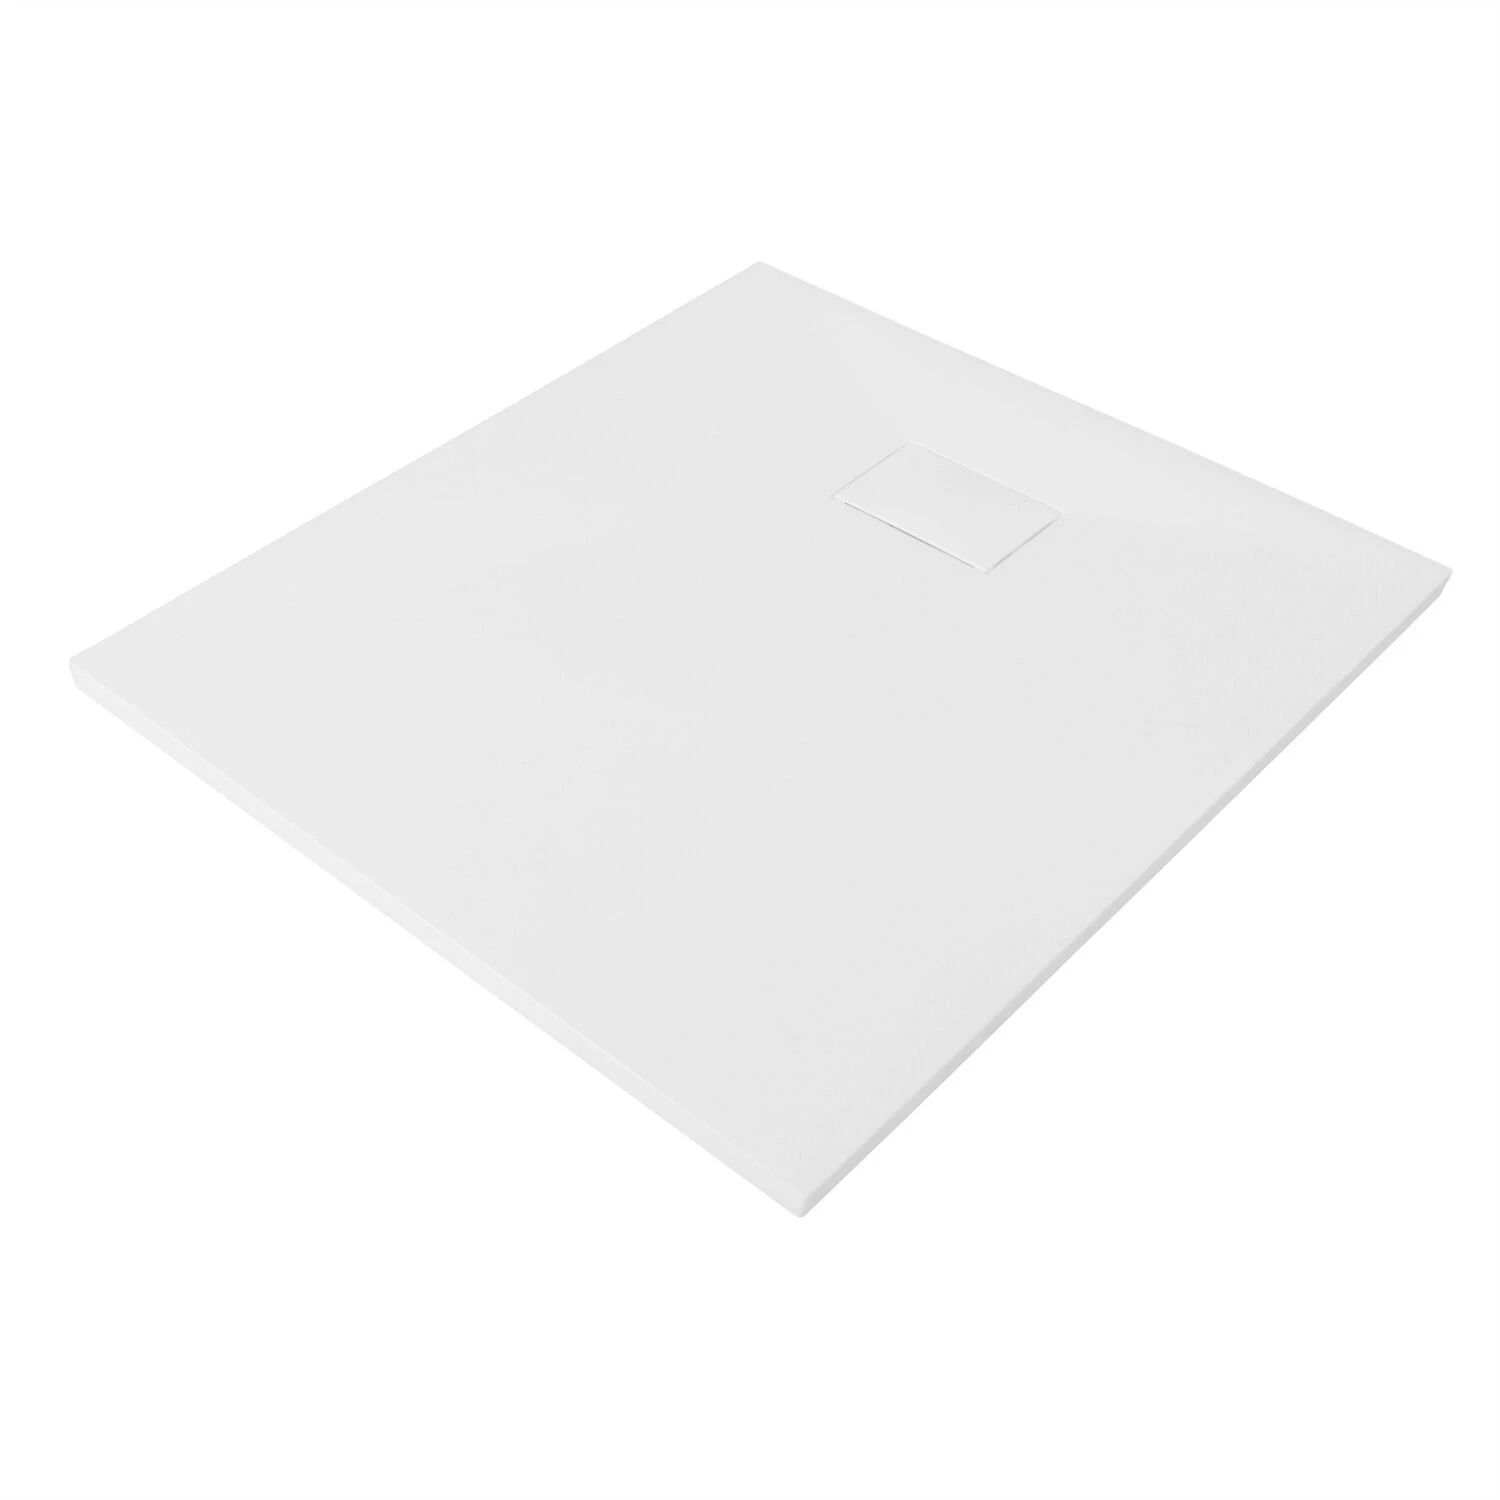 Поддон для душа WasserKRAFT Main 41T36 140x90, стеклопластик (SMC), цвет белый